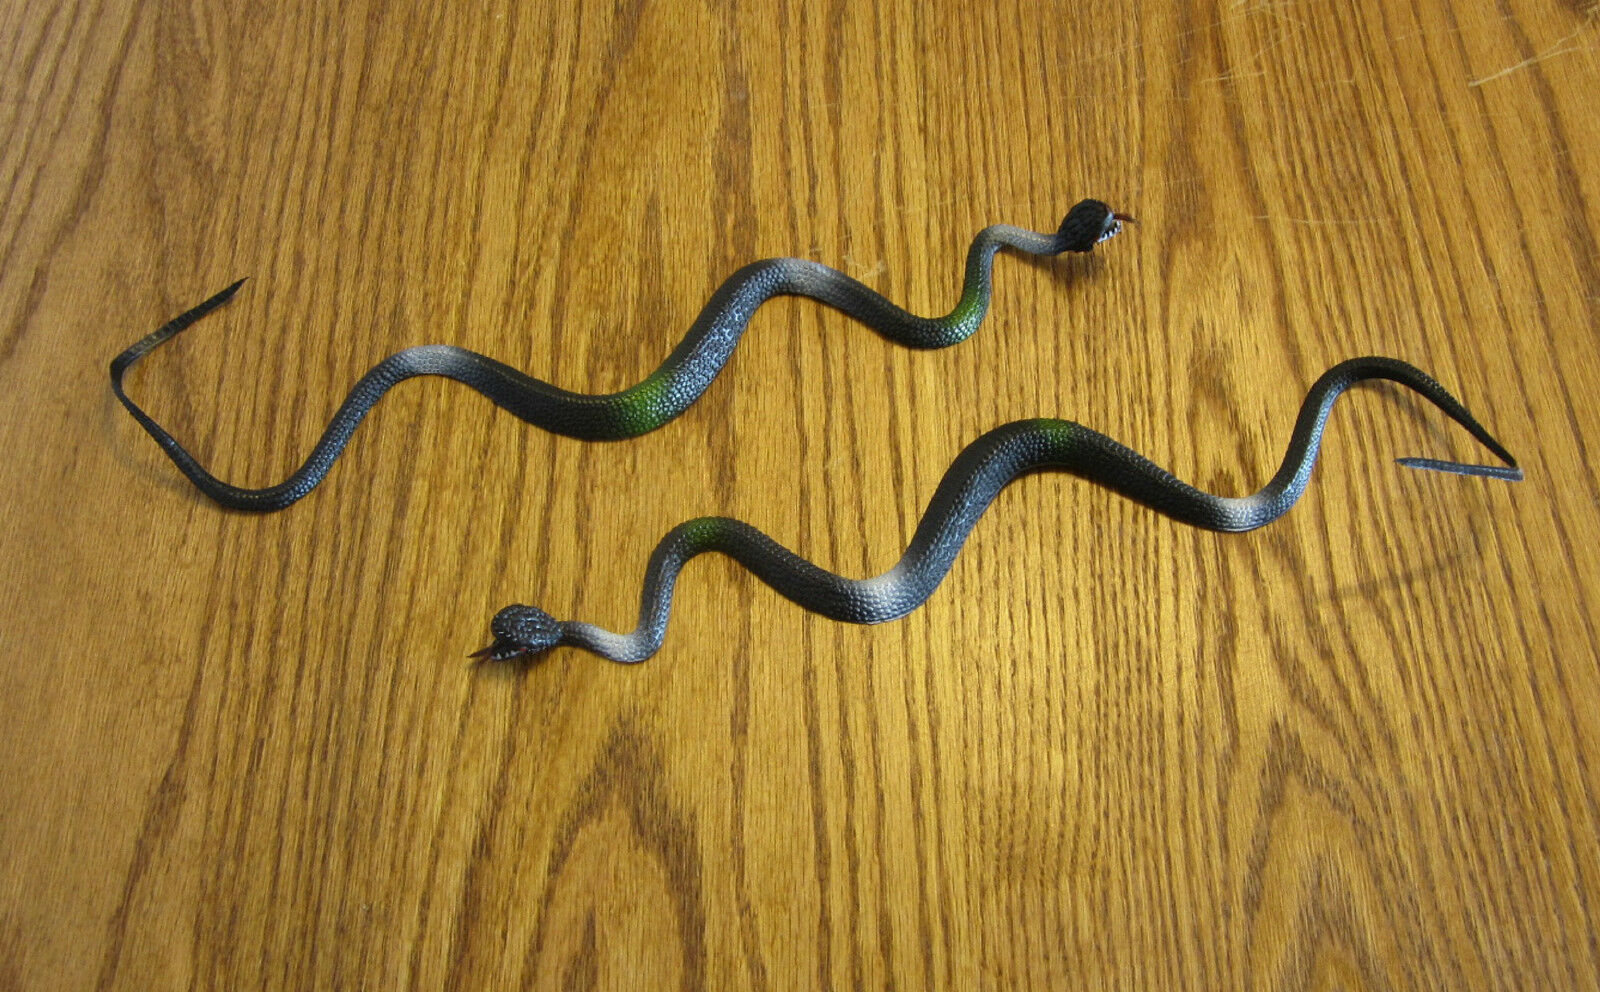 2 New Black Rubber Snakes 24" Toy Reptile Fake Pretend Halloween Snake Gag Gift